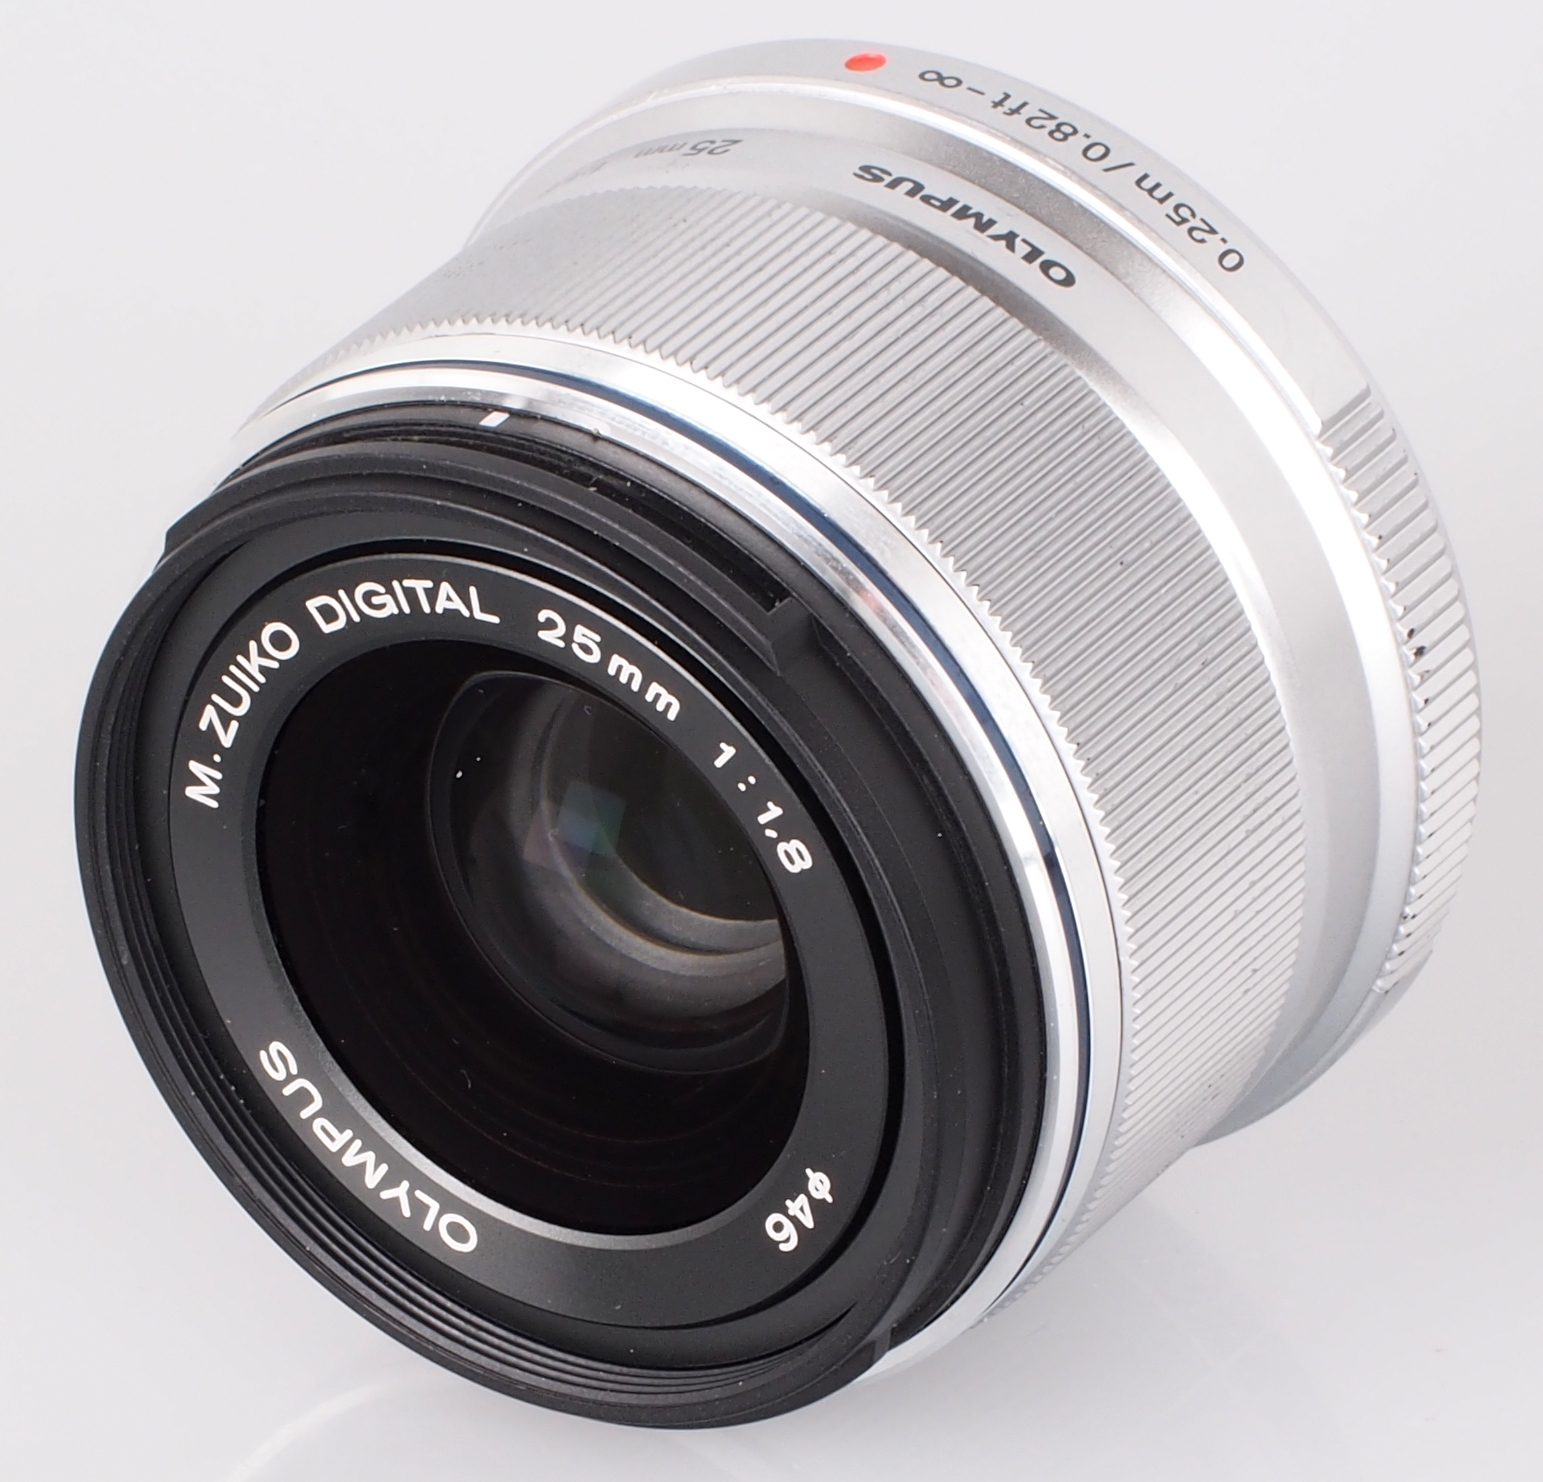 Olympus M.Zuiko 25mm f/1.8 ED Premium Lens Review